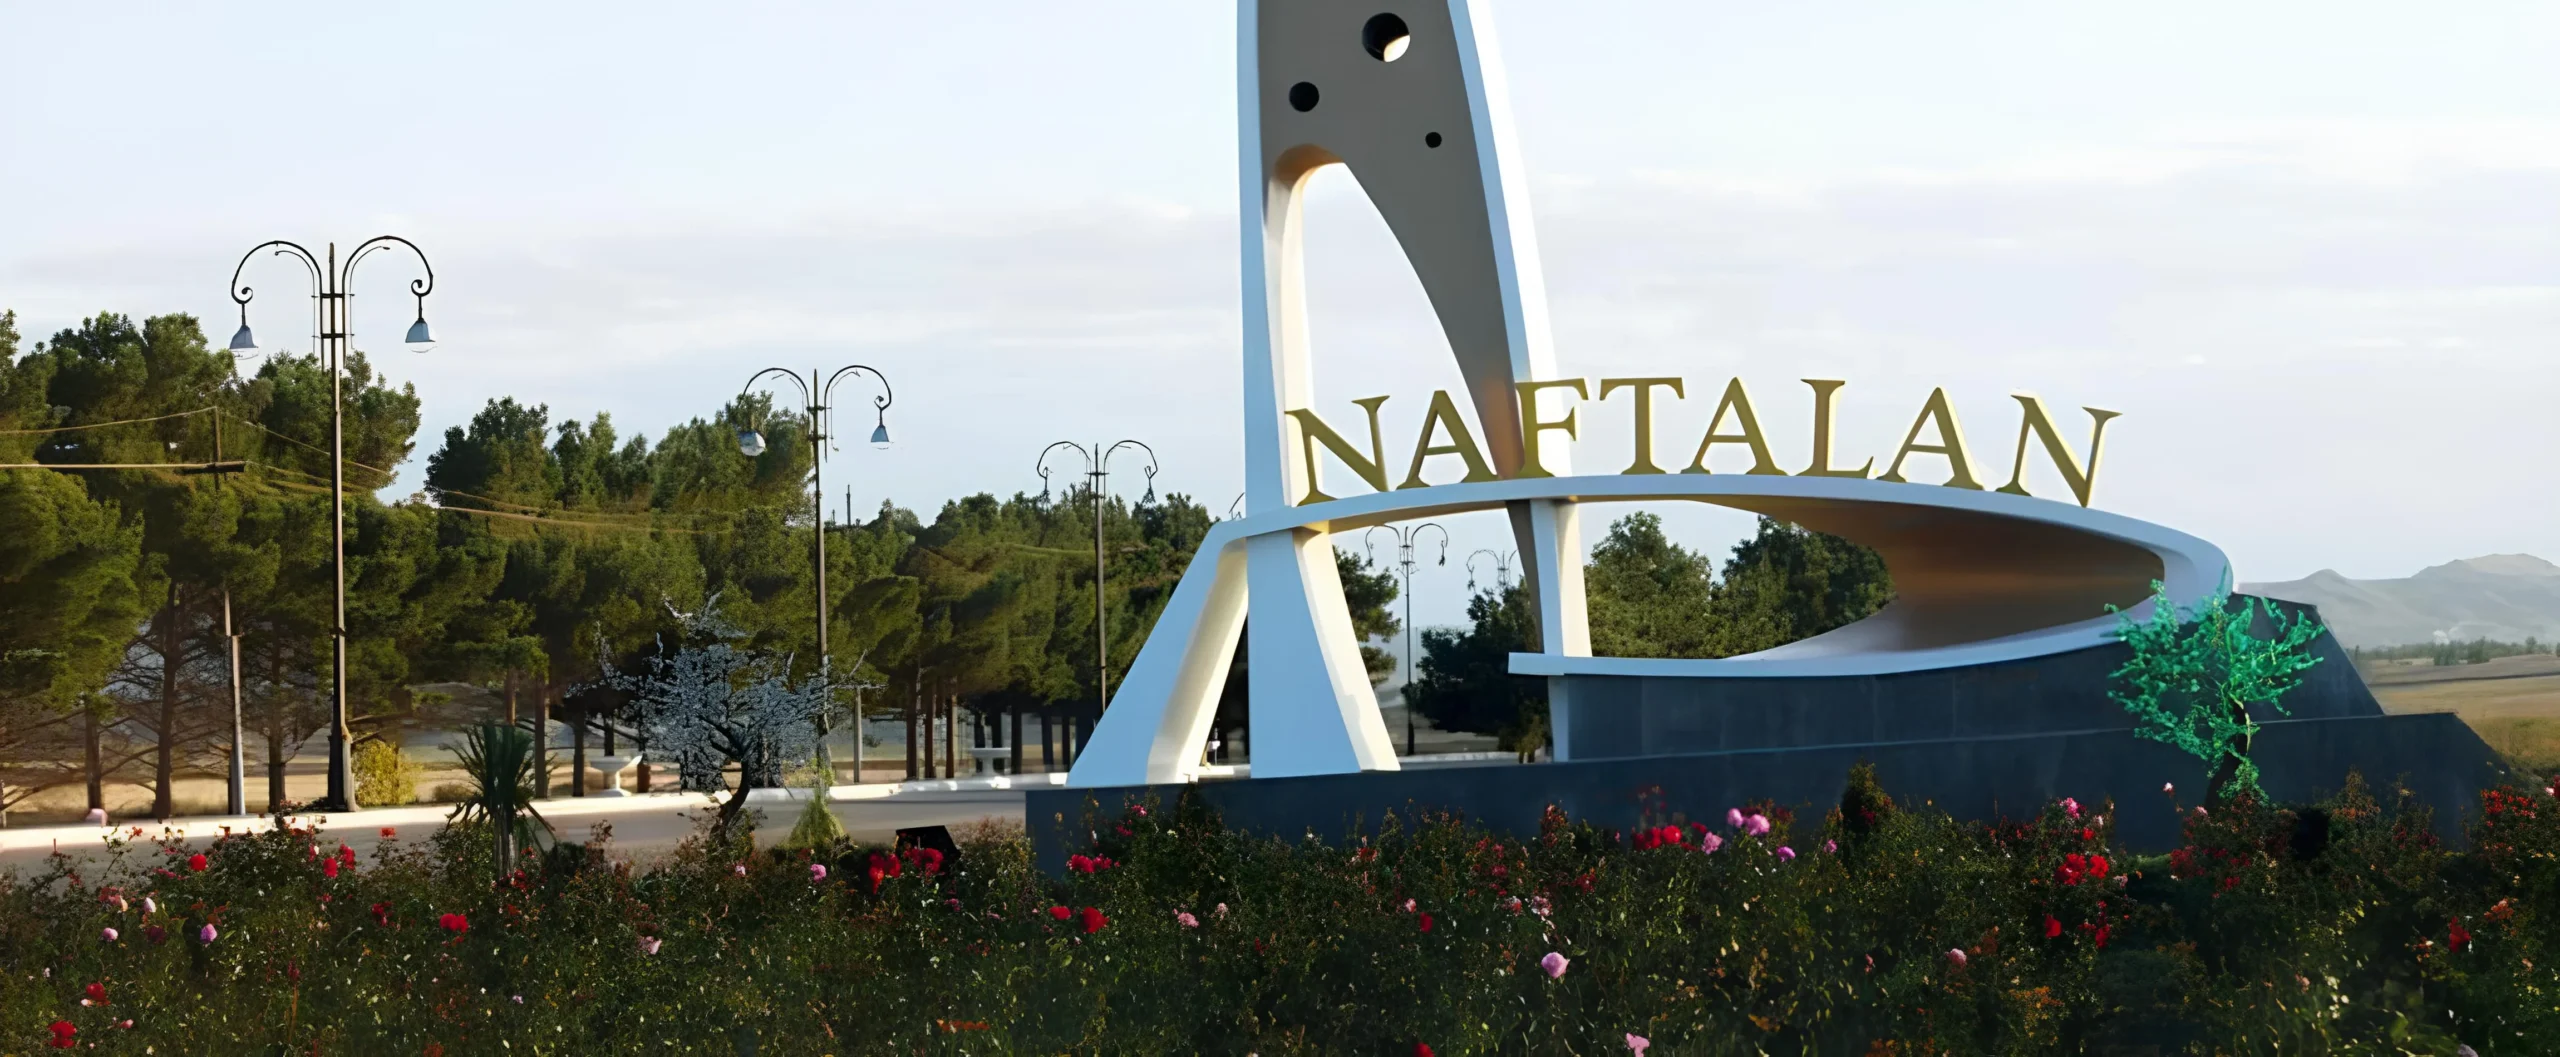 Naftalan - The Healing City